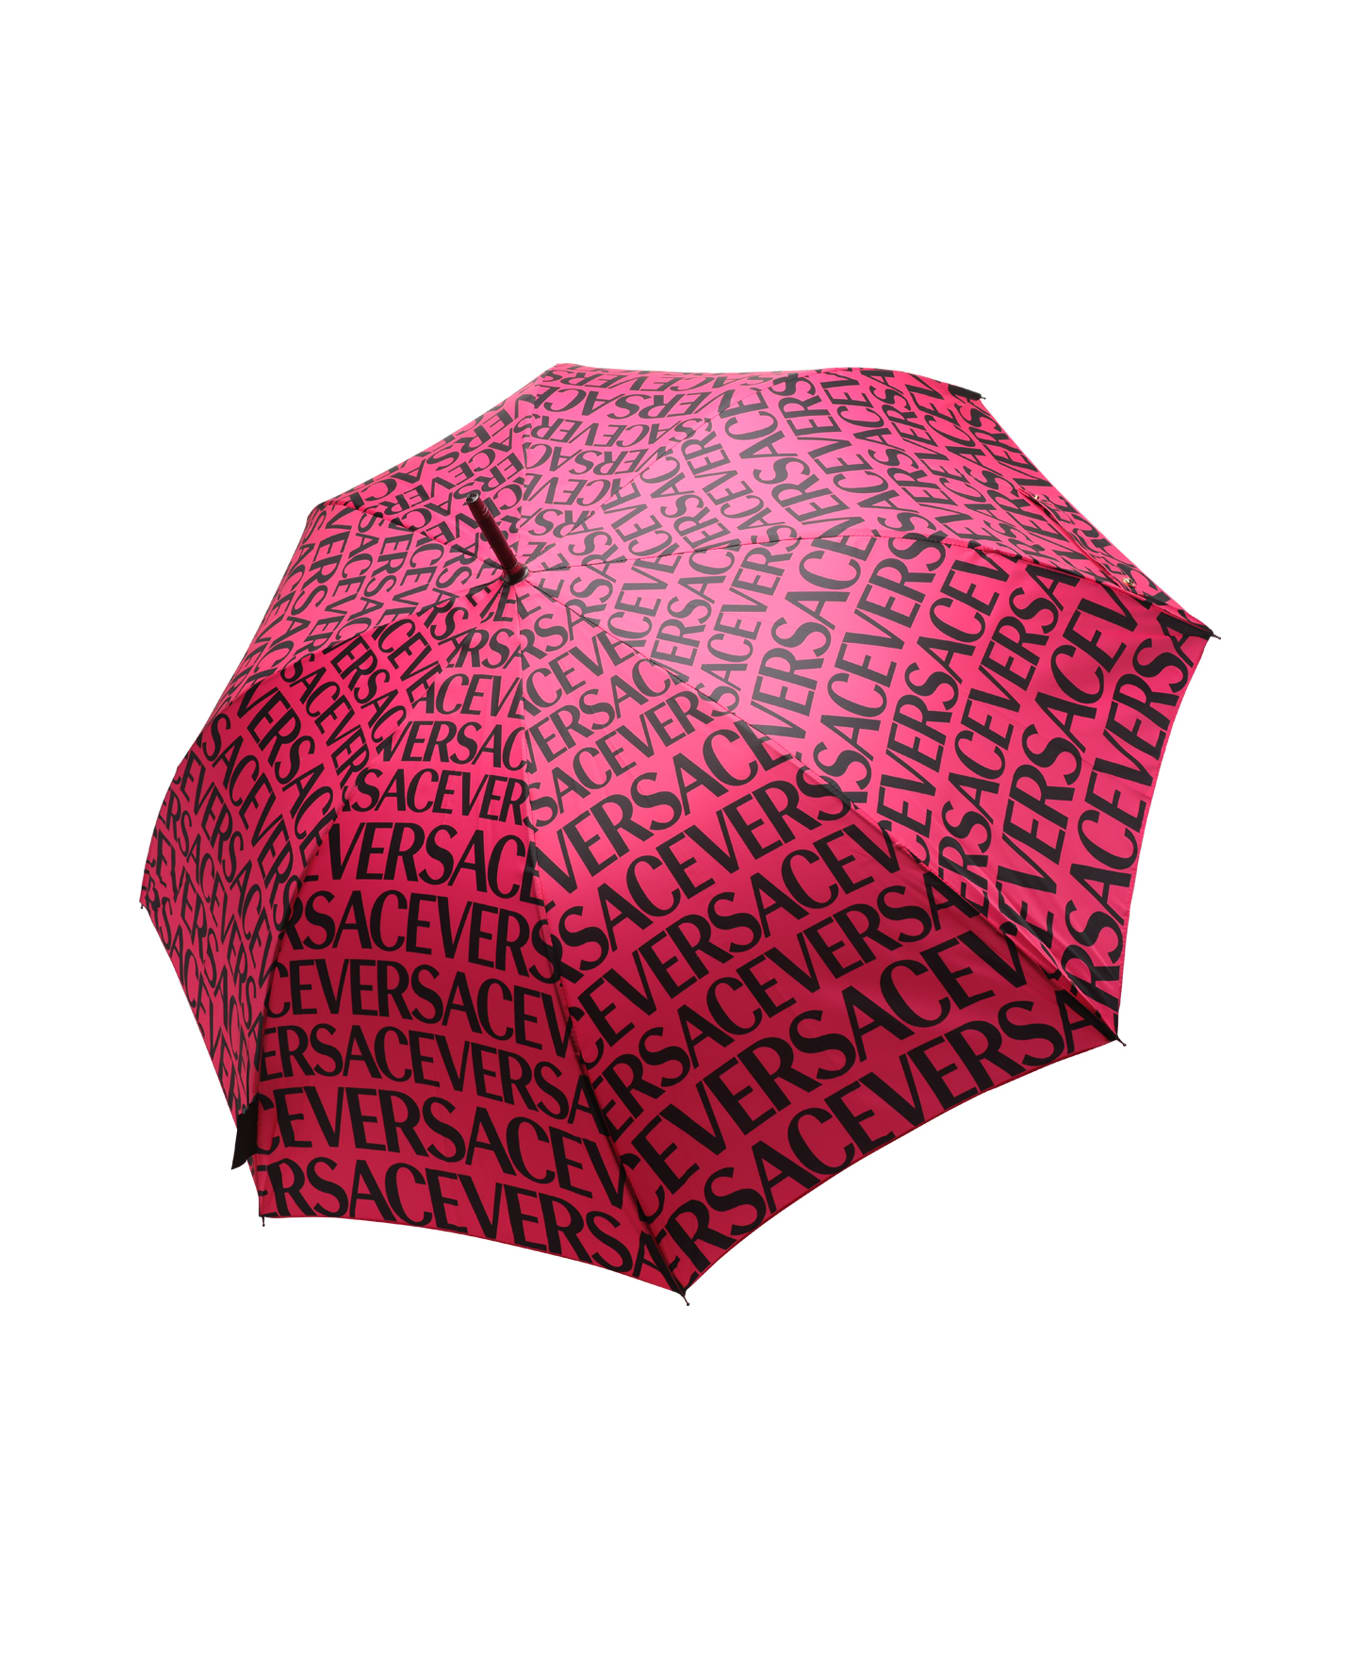 Versace Allover Umbrella - Fuxia+black 傘